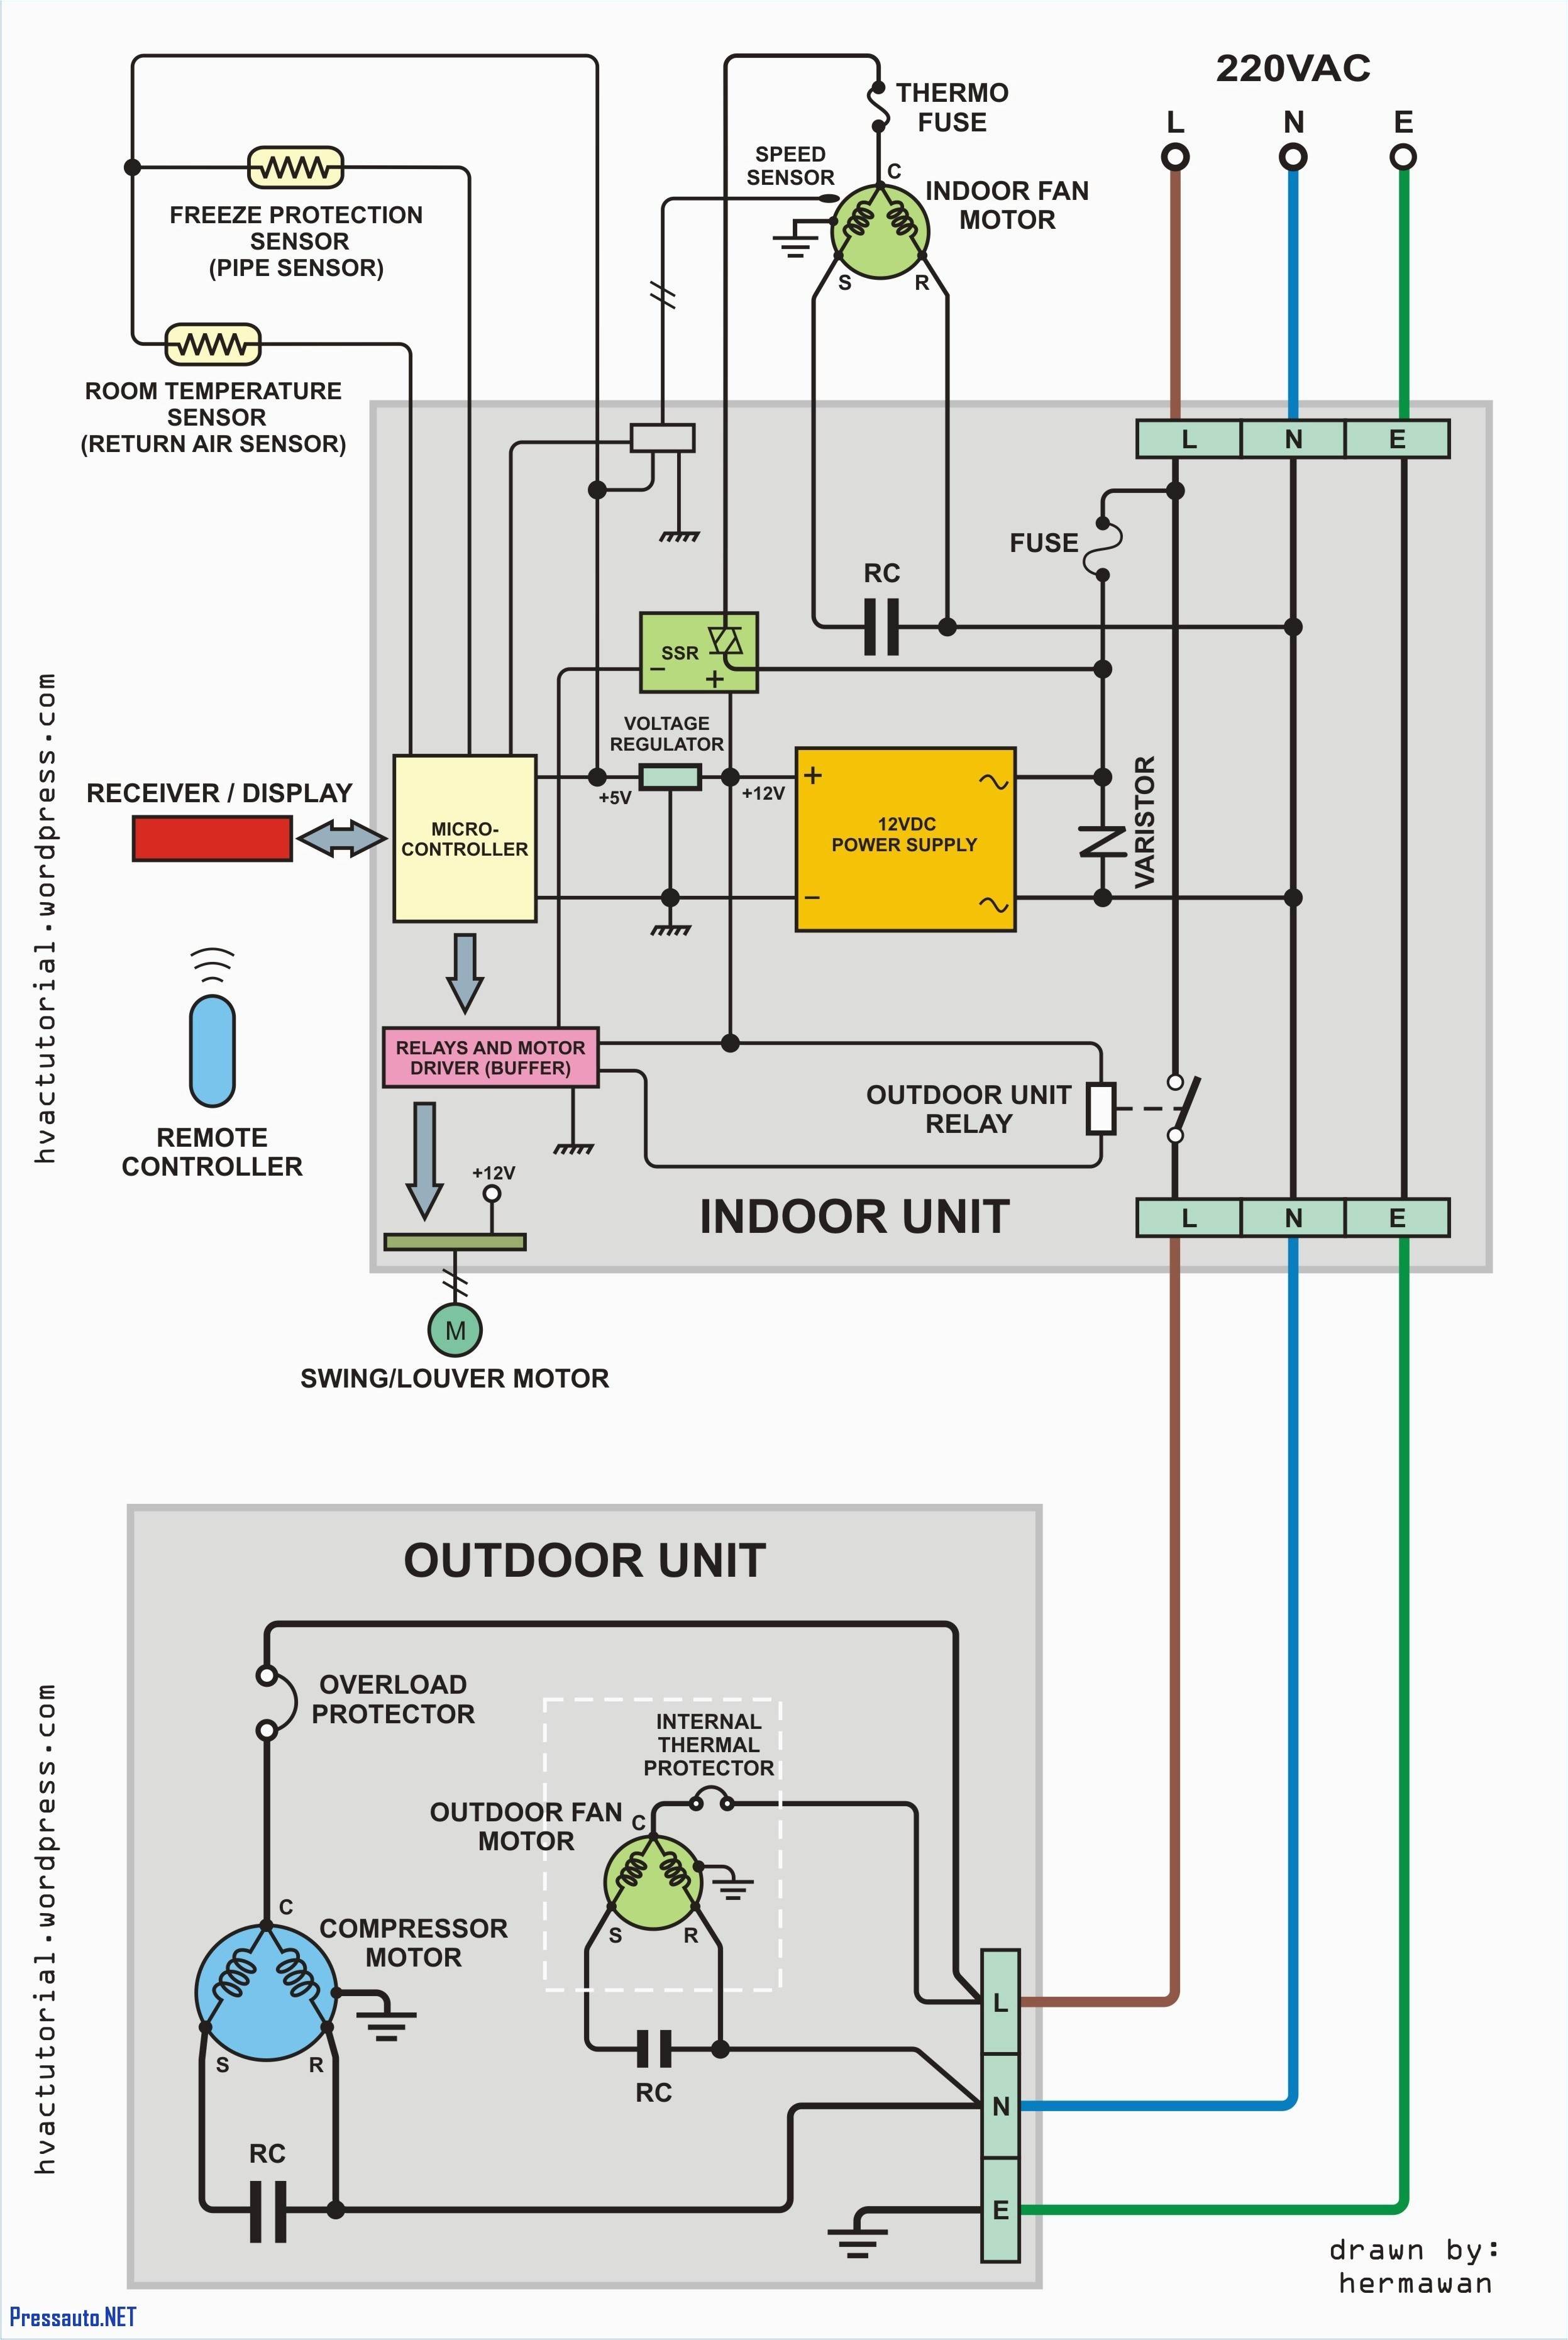 ab wiring diagrams schema diagram databasewiring diagrams c2 ab myrons mopeds wiring diagram review ab wiring